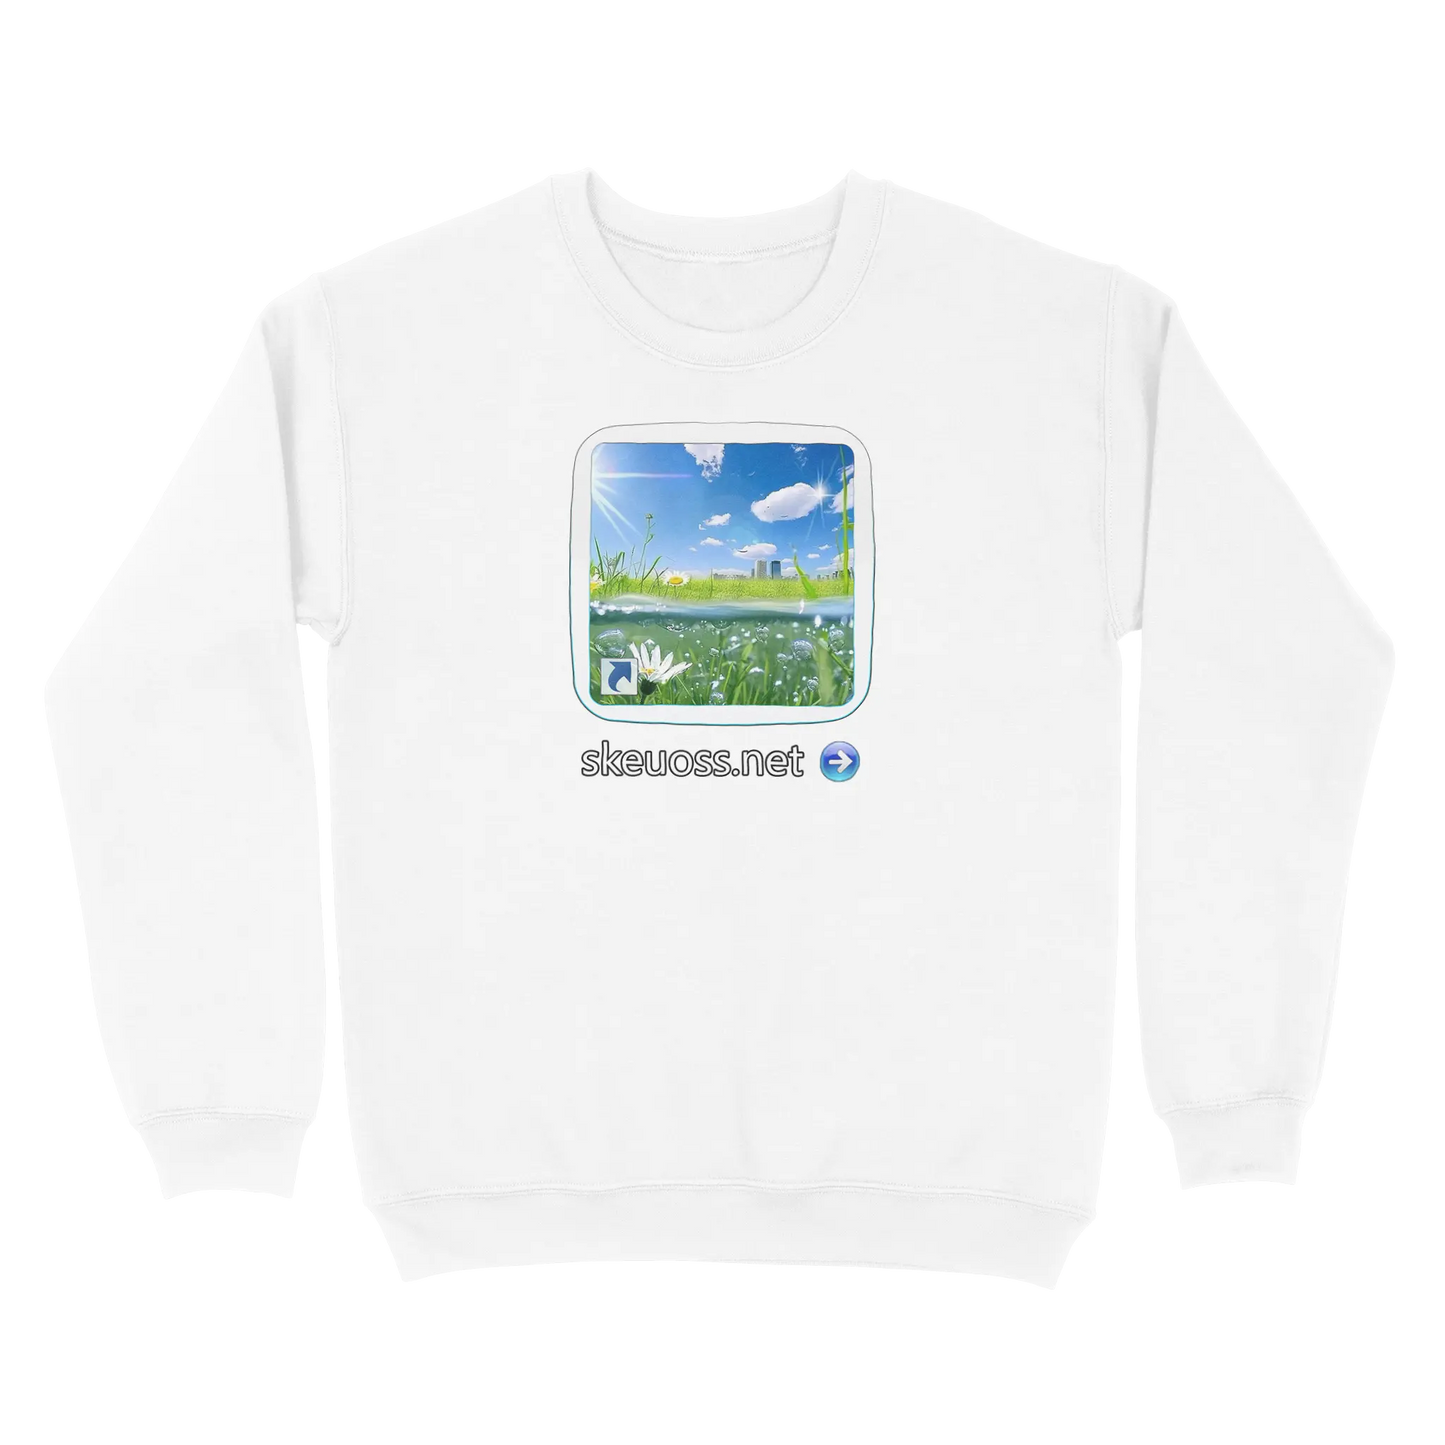 Frutiger Aero Sweatshirt - User Login Collection - User 322